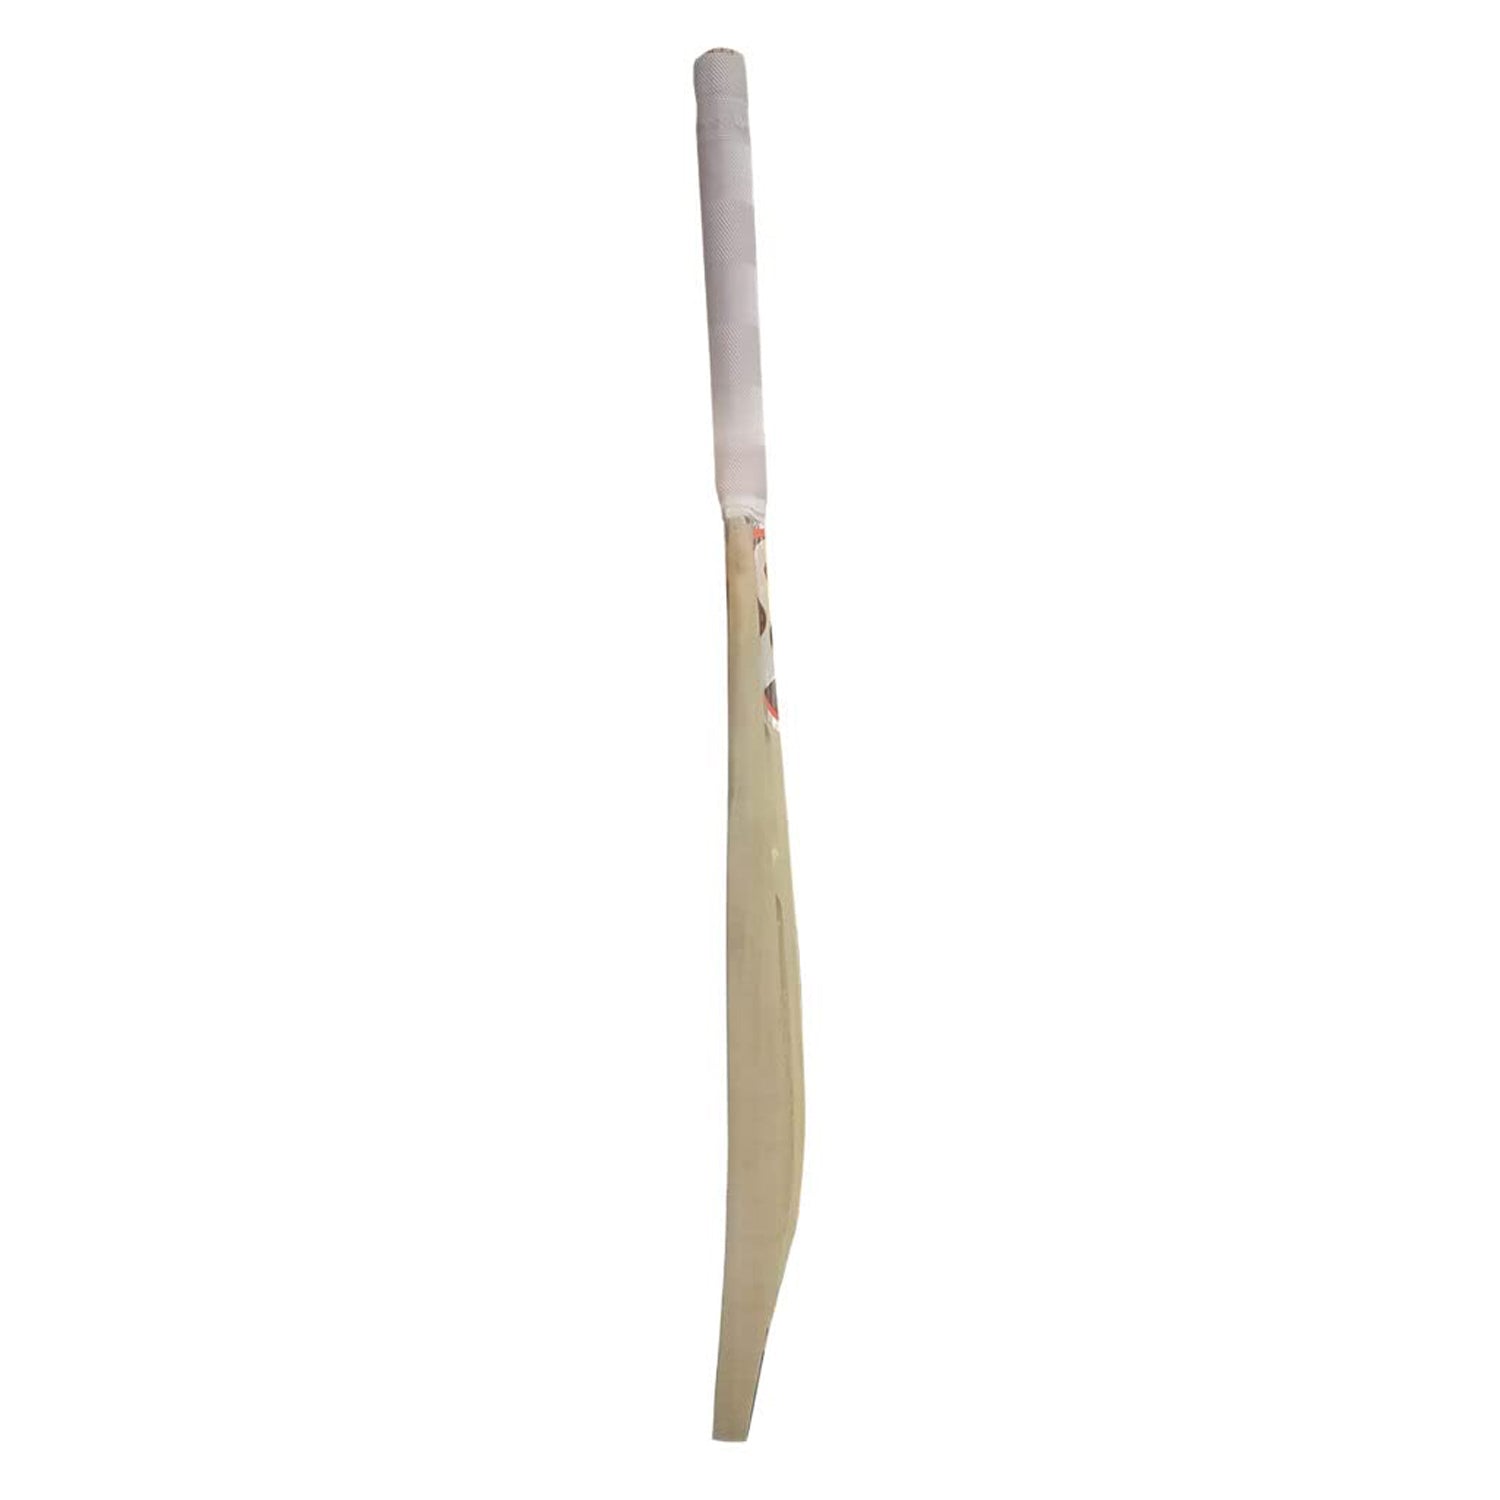 SG T-1000 Kashmir Willow Tennis Cricket Bat - Best Price online Prokicksports.com